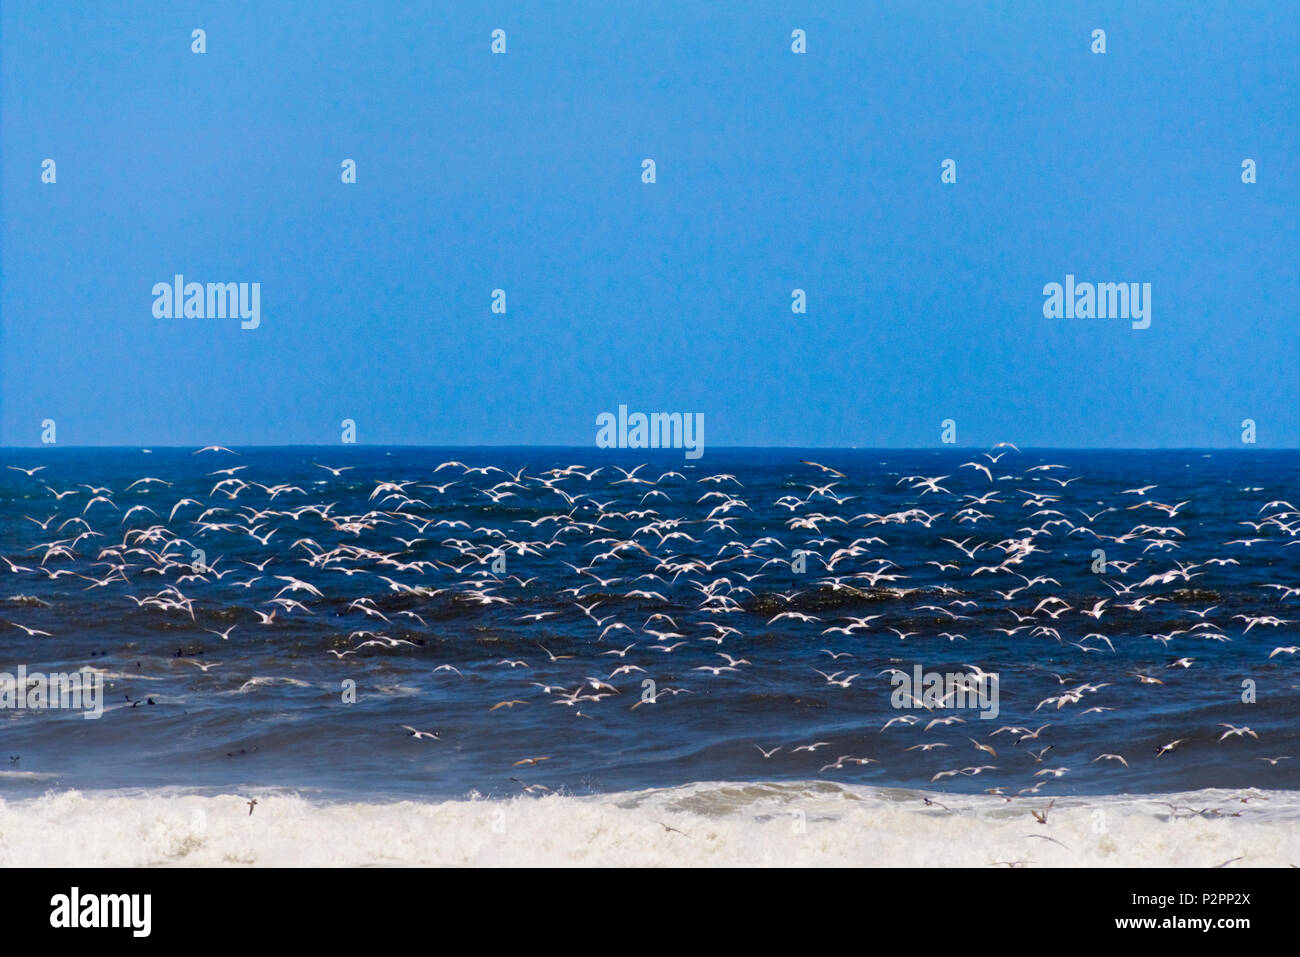 Seagulls on Skeleton Coast of South Atlantic Ocean, Cape Cross, Erongo Region, Namibia Stock Photo